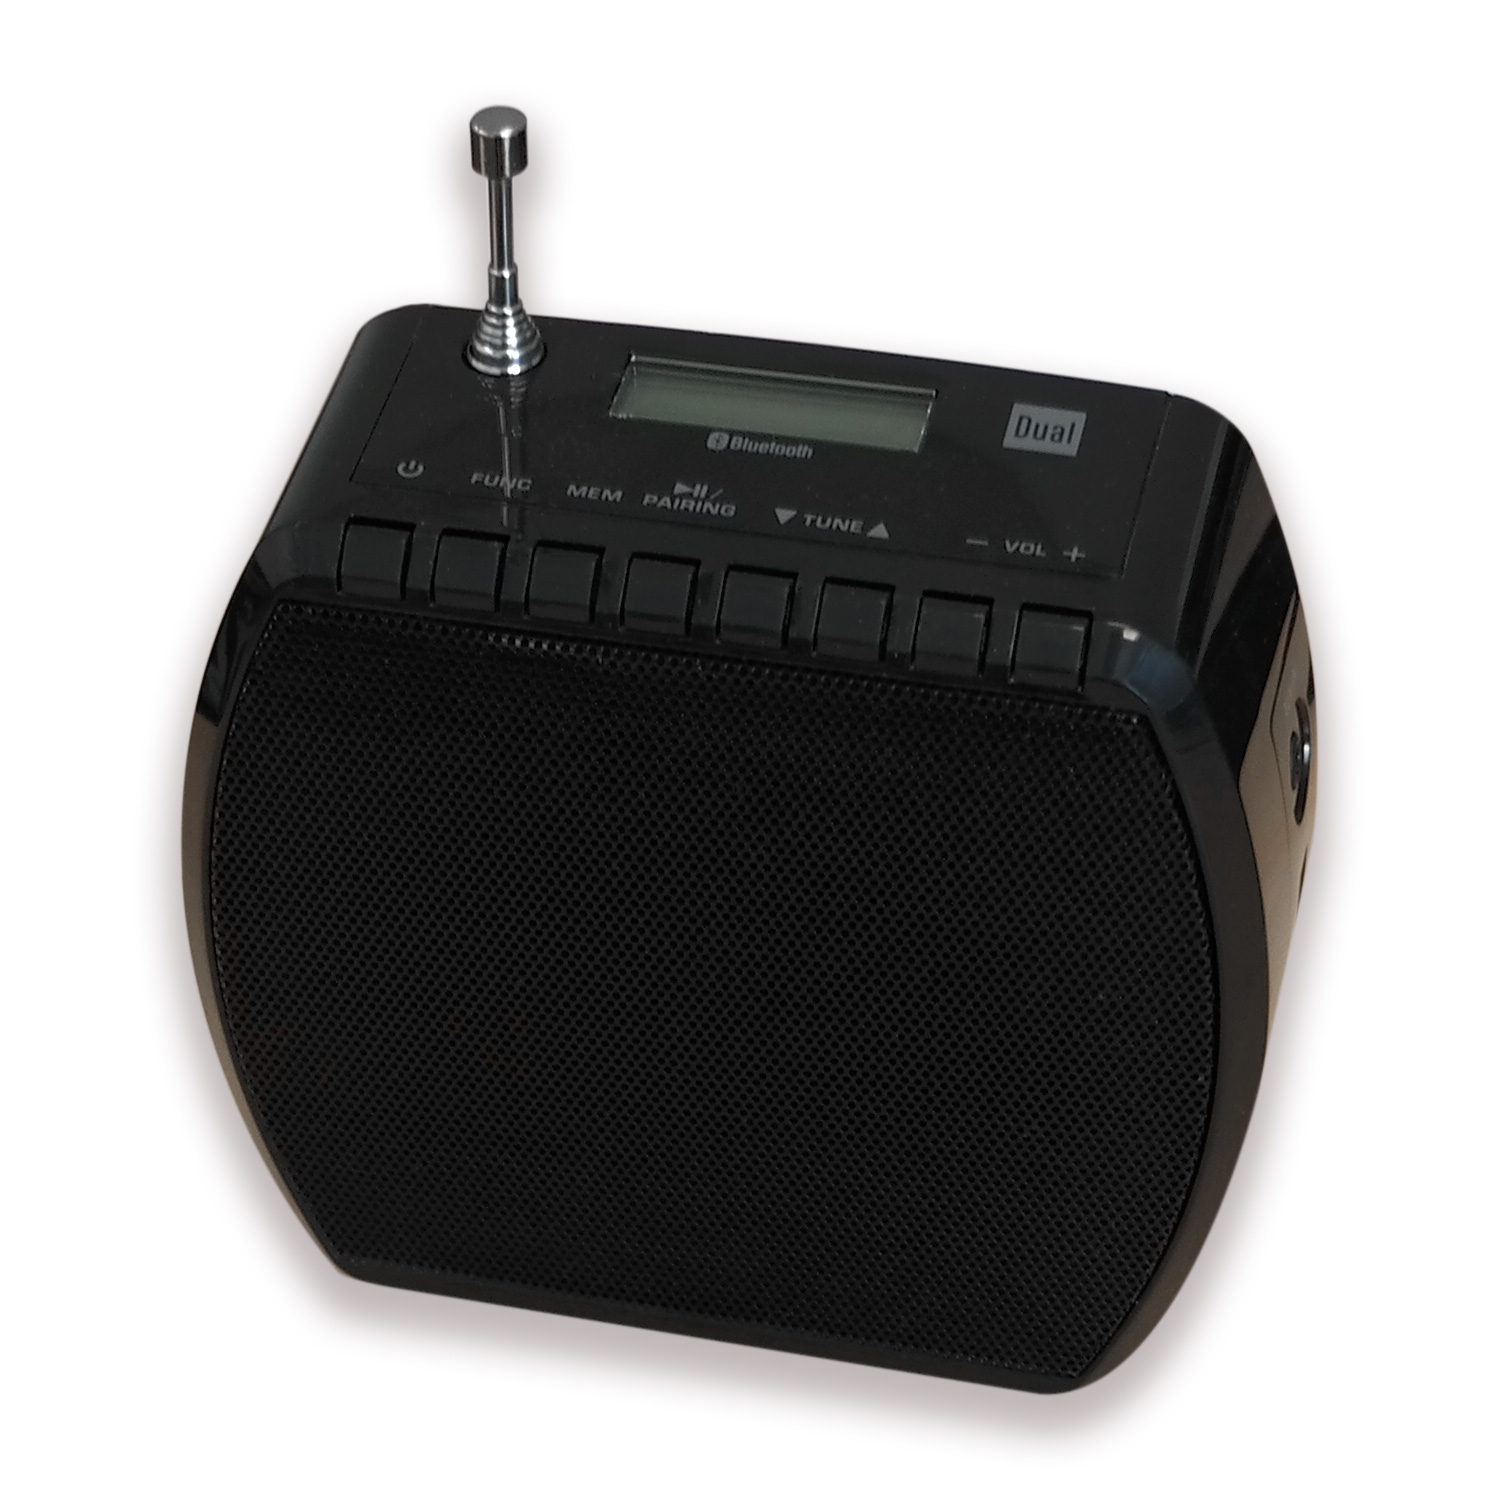 Dual STR 101 Steckdosenradio (UKW-Radio, Bluetooth für Audiostreaming, Akku-Betrieb) schwarz von Dual